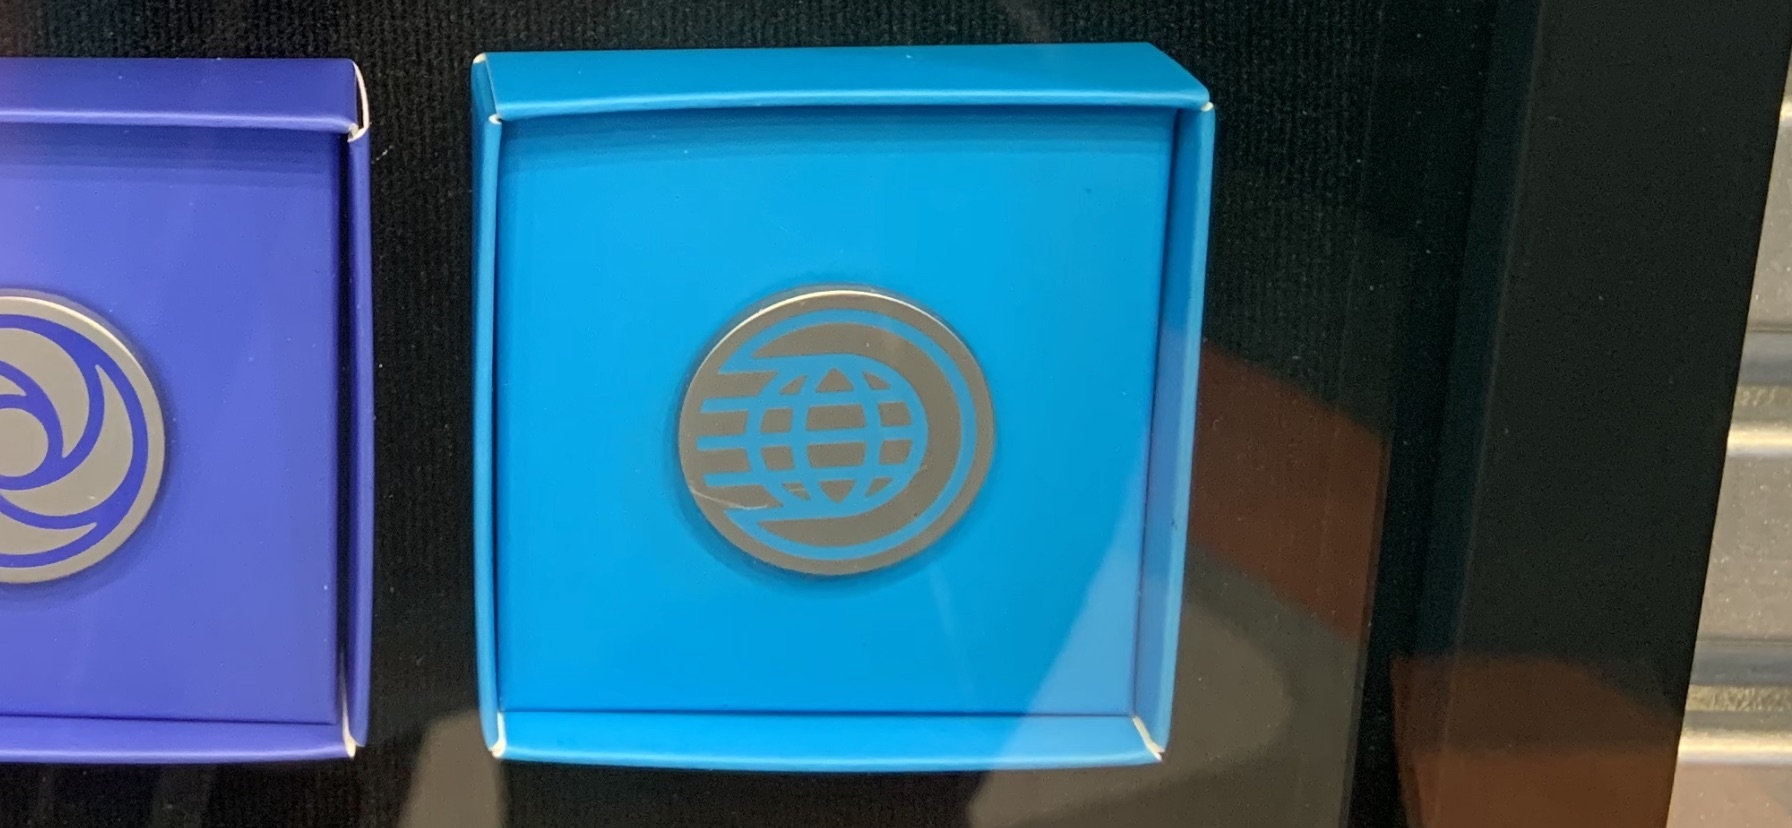 EPCOT pavilion logo pins 12/23/19 15